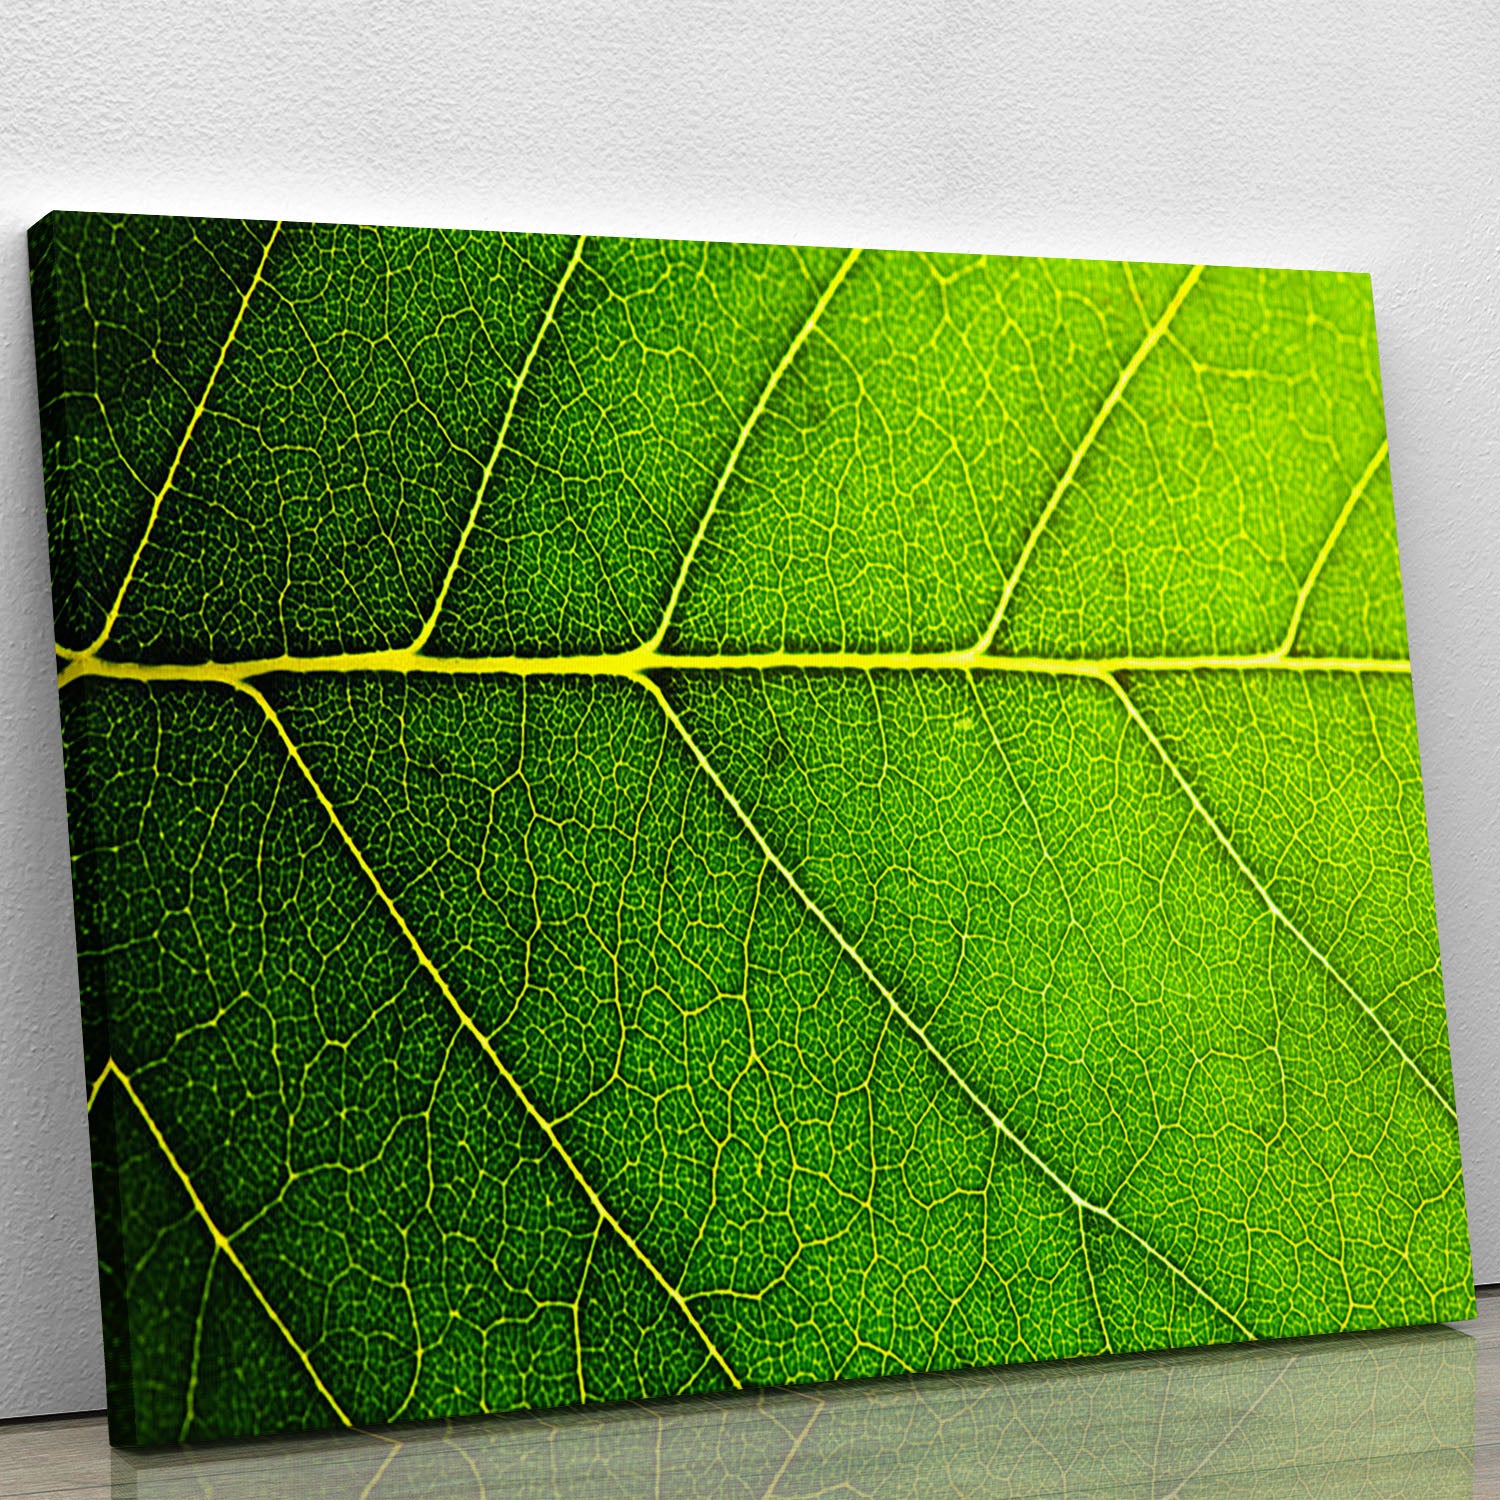 Leaf macro shot Canvas Print or Poster - Canvas Art Rocks - 1